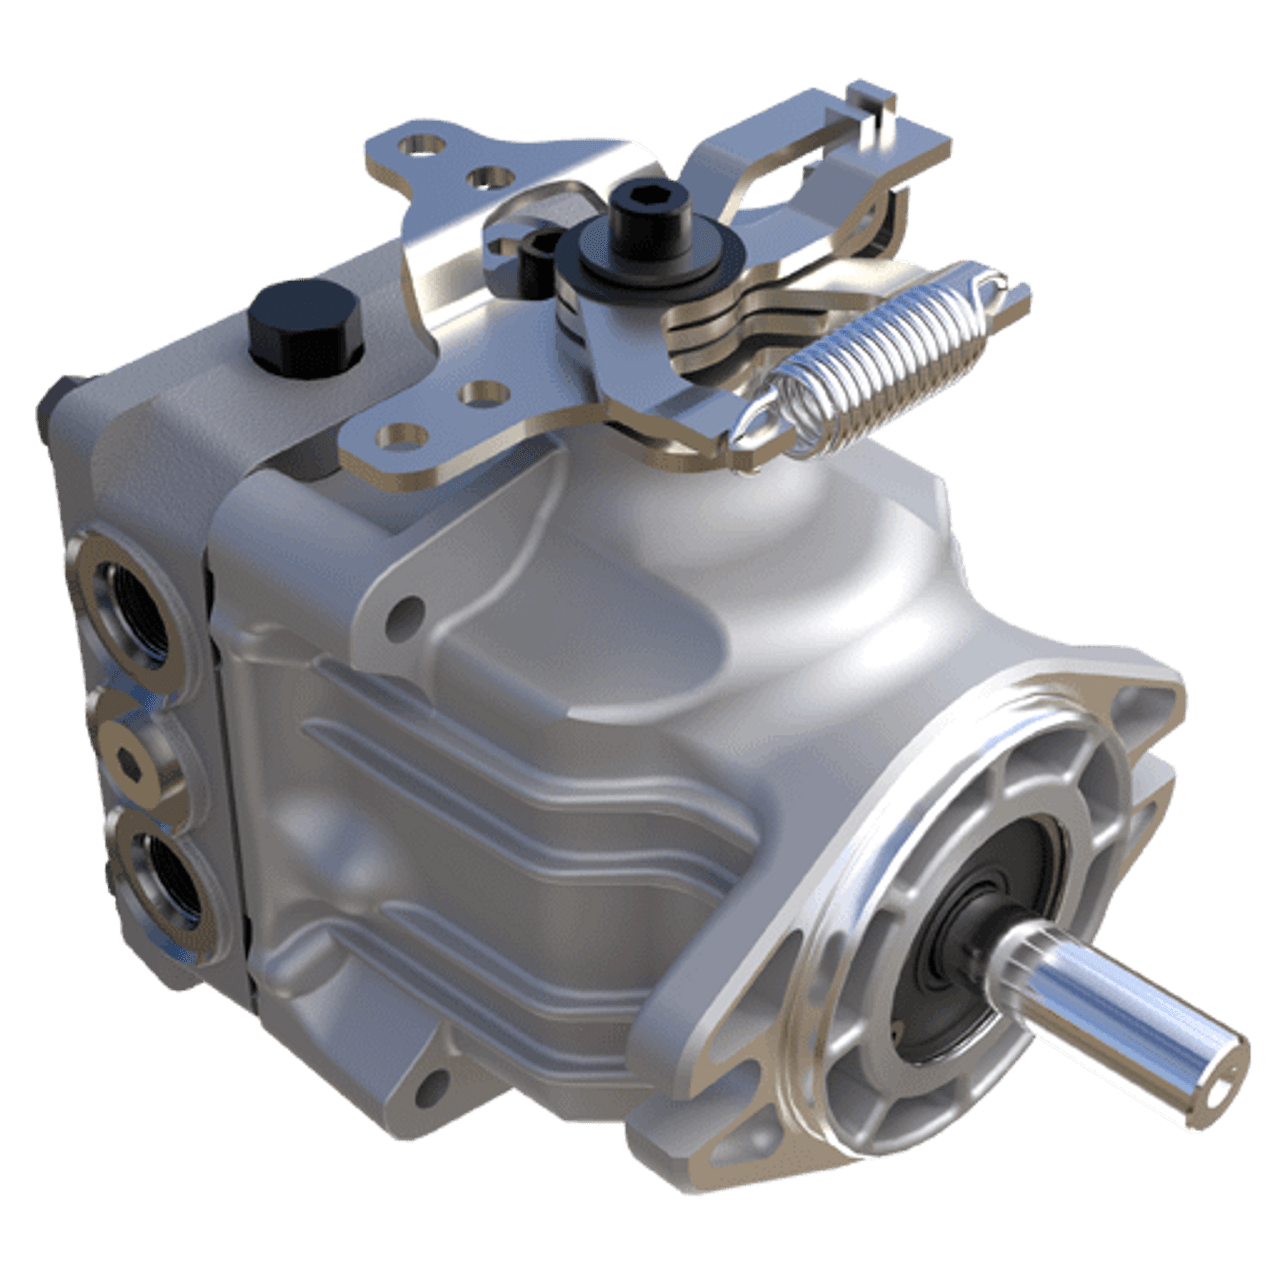 Hydro Gear PK-5HCC-GG1B-XXXX Hydraulic Pump P Series | Original OEM Part | Free Shipping - LawnMowerPartsWorld.com